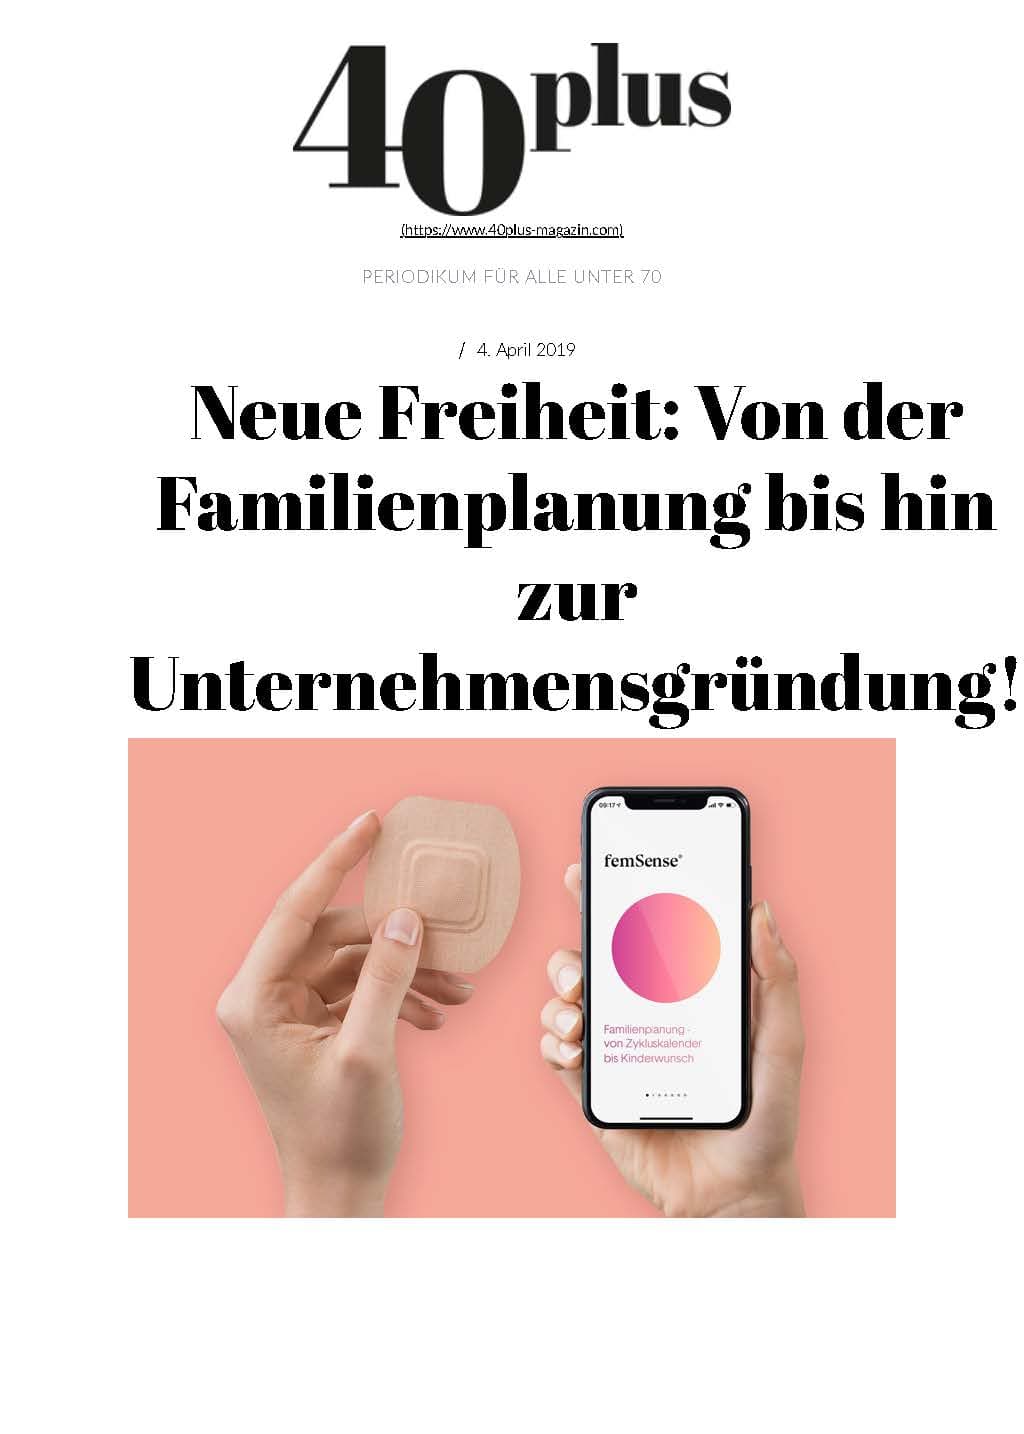 Magazin 40plus on 4. April 2019 writes about femSense, page 1